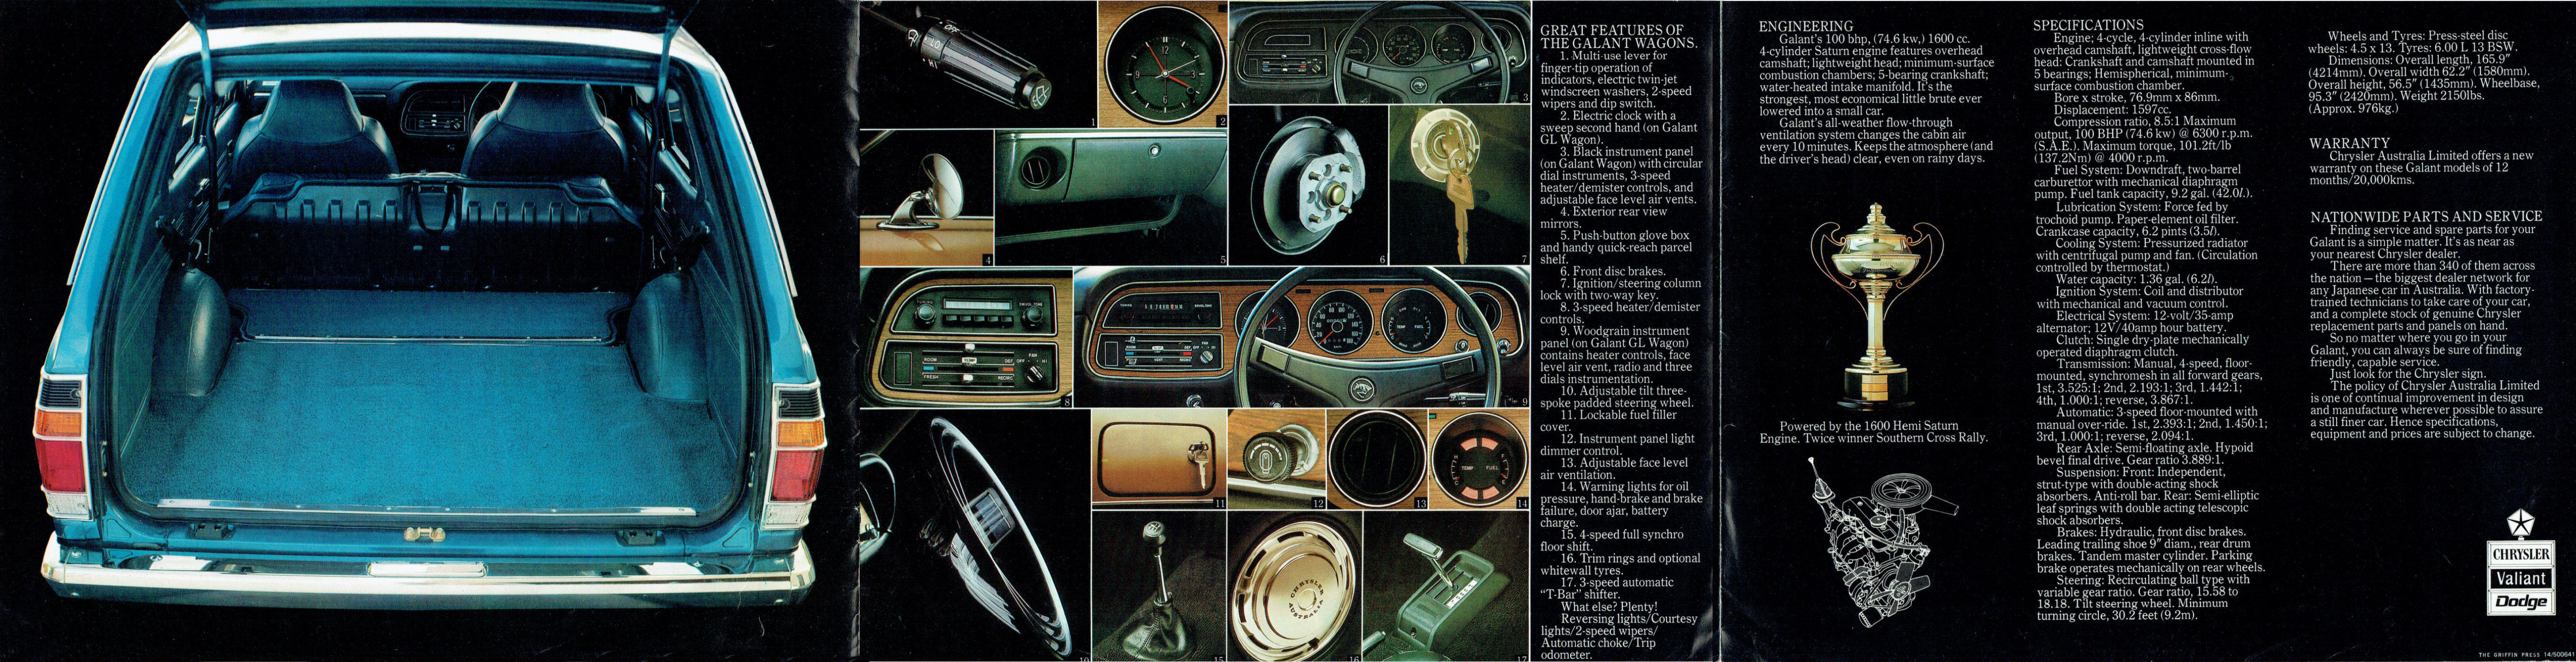 1974_Chrysler_GC_Galant_Wagon-Side_B